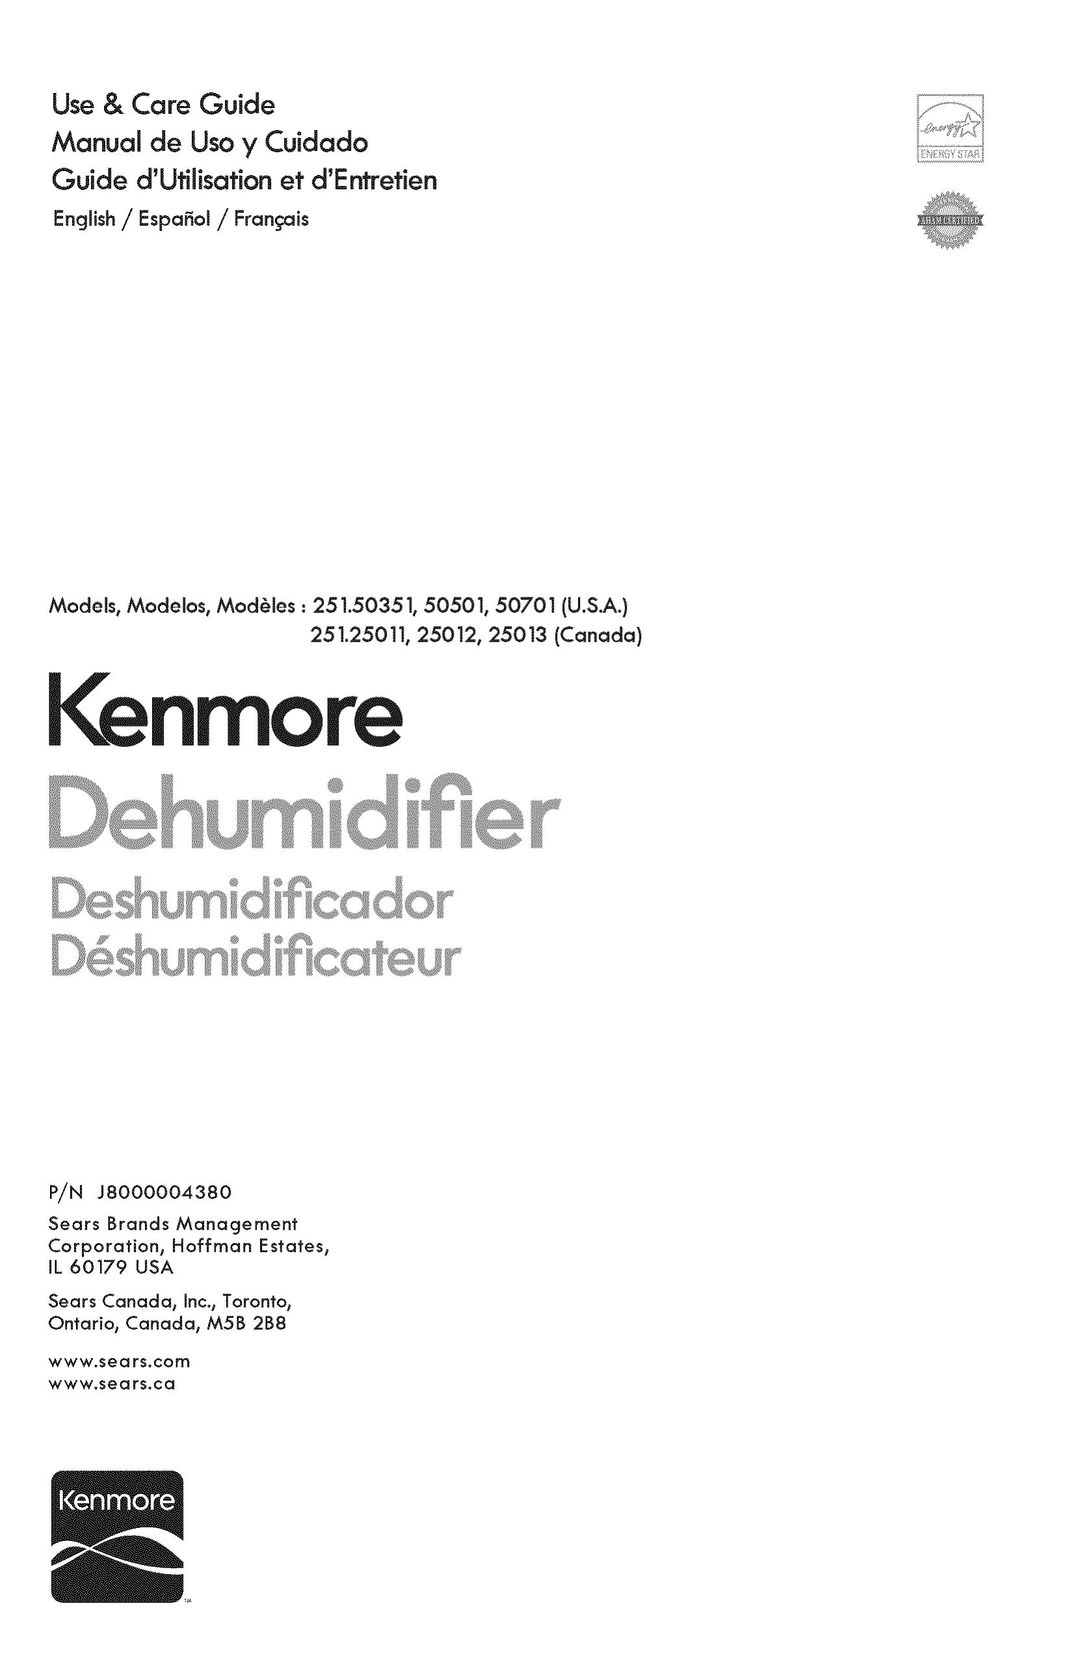 Kenmore 251.25012 Dehumidifier User Manual